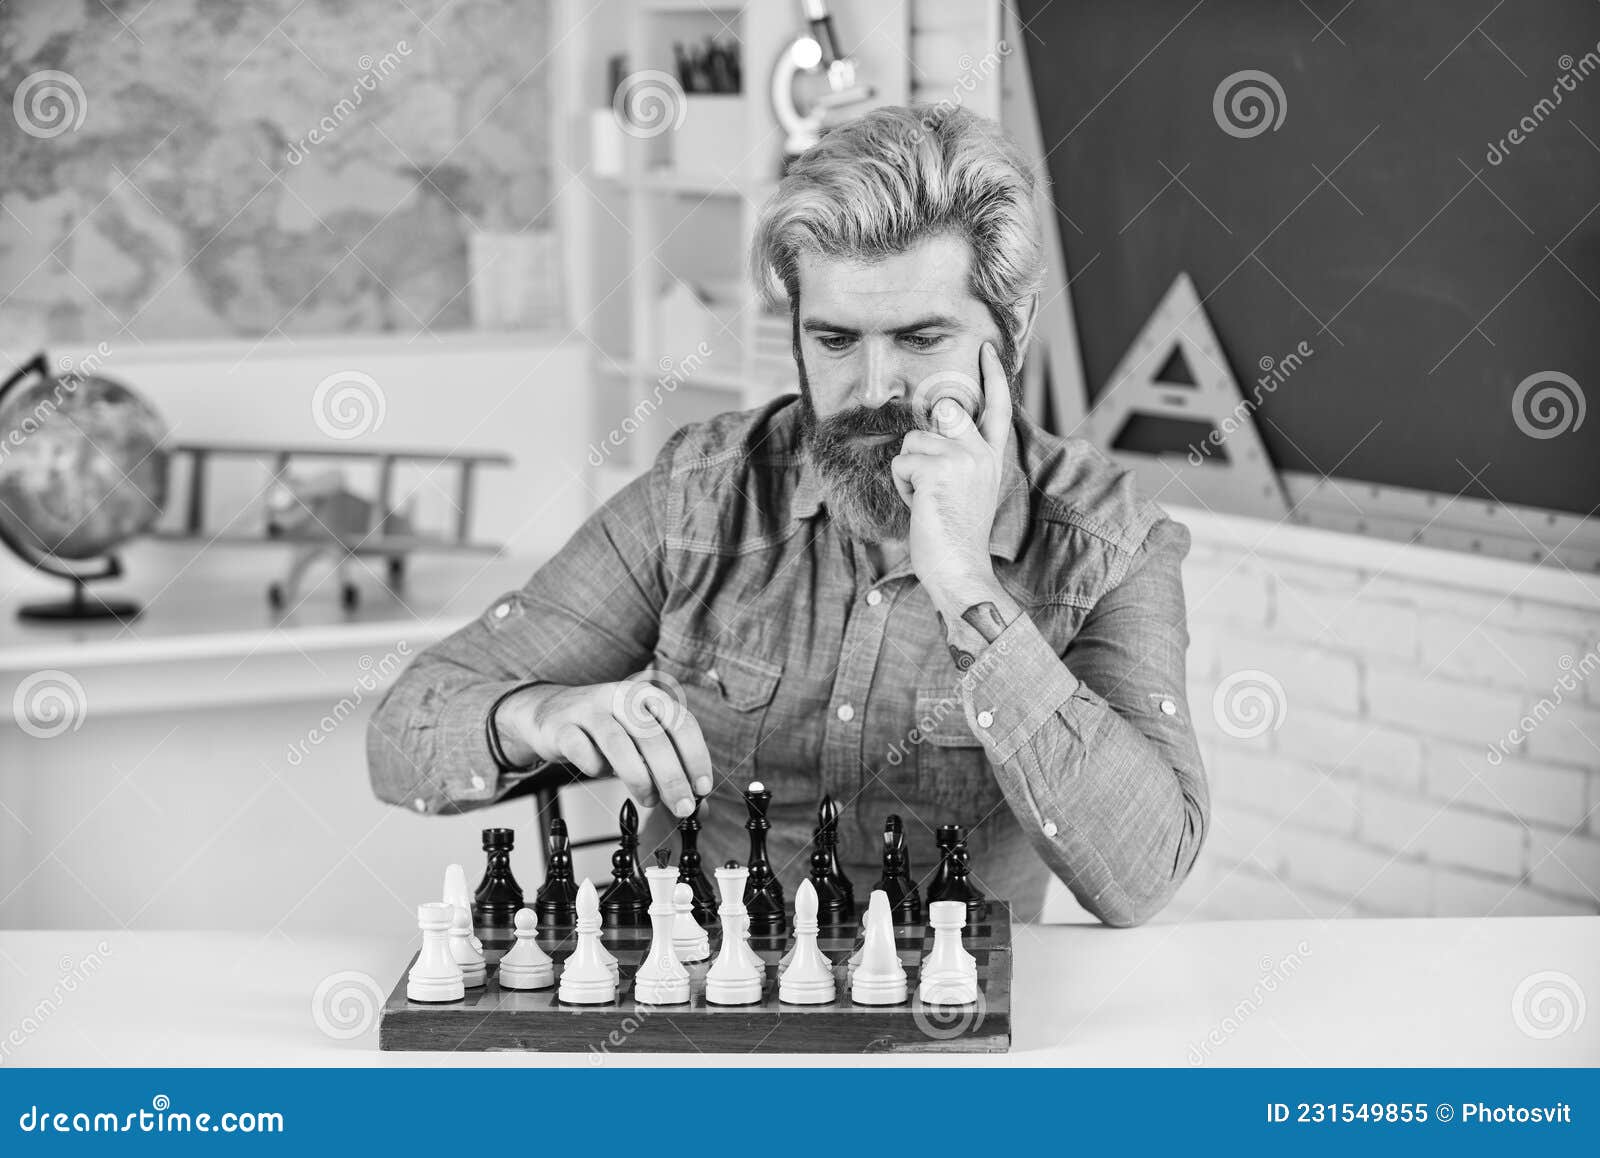 Conjunto de xadrez pensando no próximo movimento homem treinando